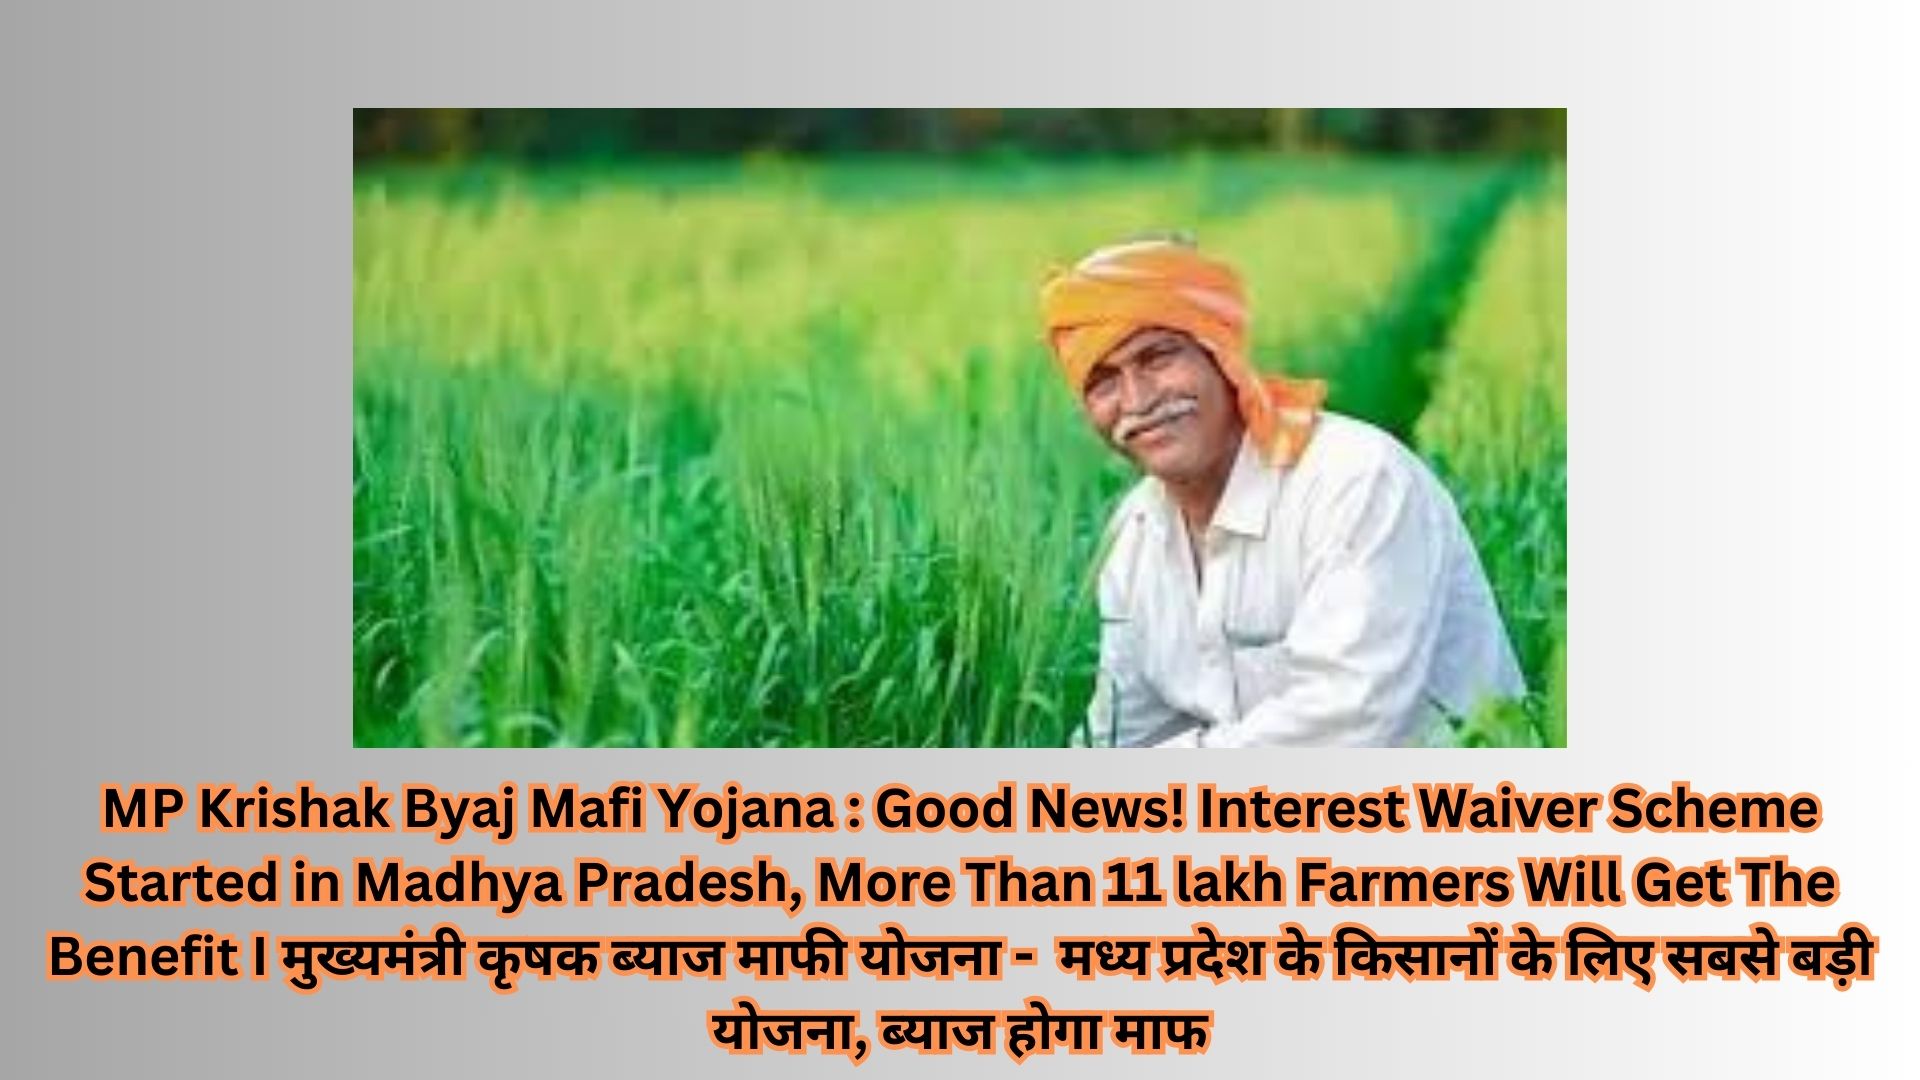 MP Krishak Byaj Mafi Yojana : Good News! Interest Waiver Scheme Started in Madhya Pradesh, More Than 11 lakh Farmers Will Get The Benefit I मुख्यमंत्री कृषक ब्याज माफी योजना - मध्य प्रदेश के किसानों के लिए सबसे बड़ी योजना, ब्याज होगा माफ